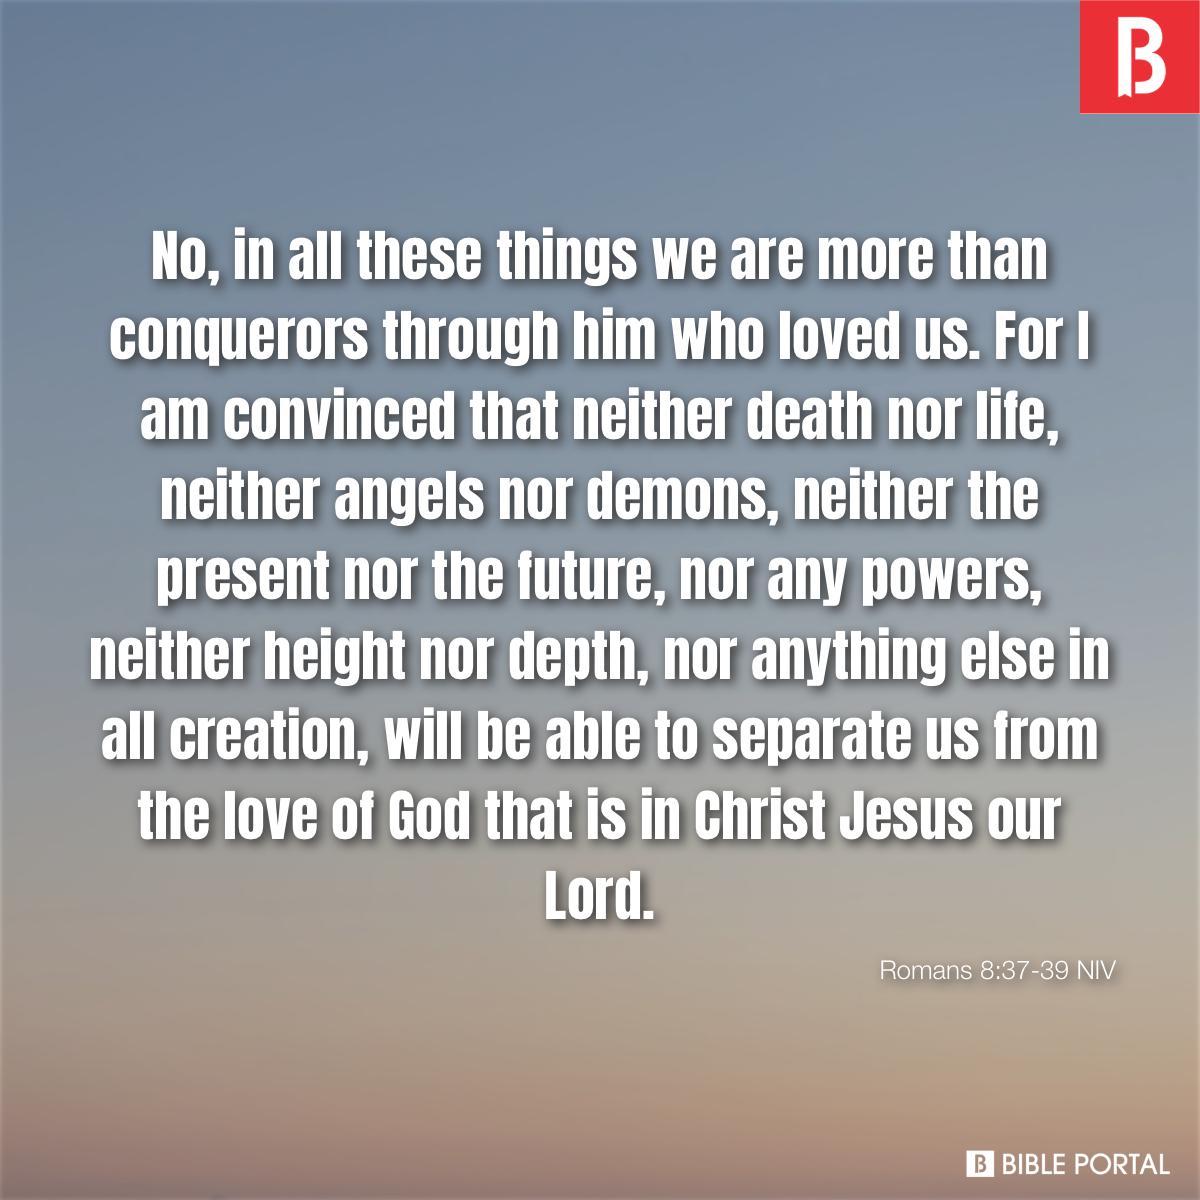 Romans 8:37-39 NIV